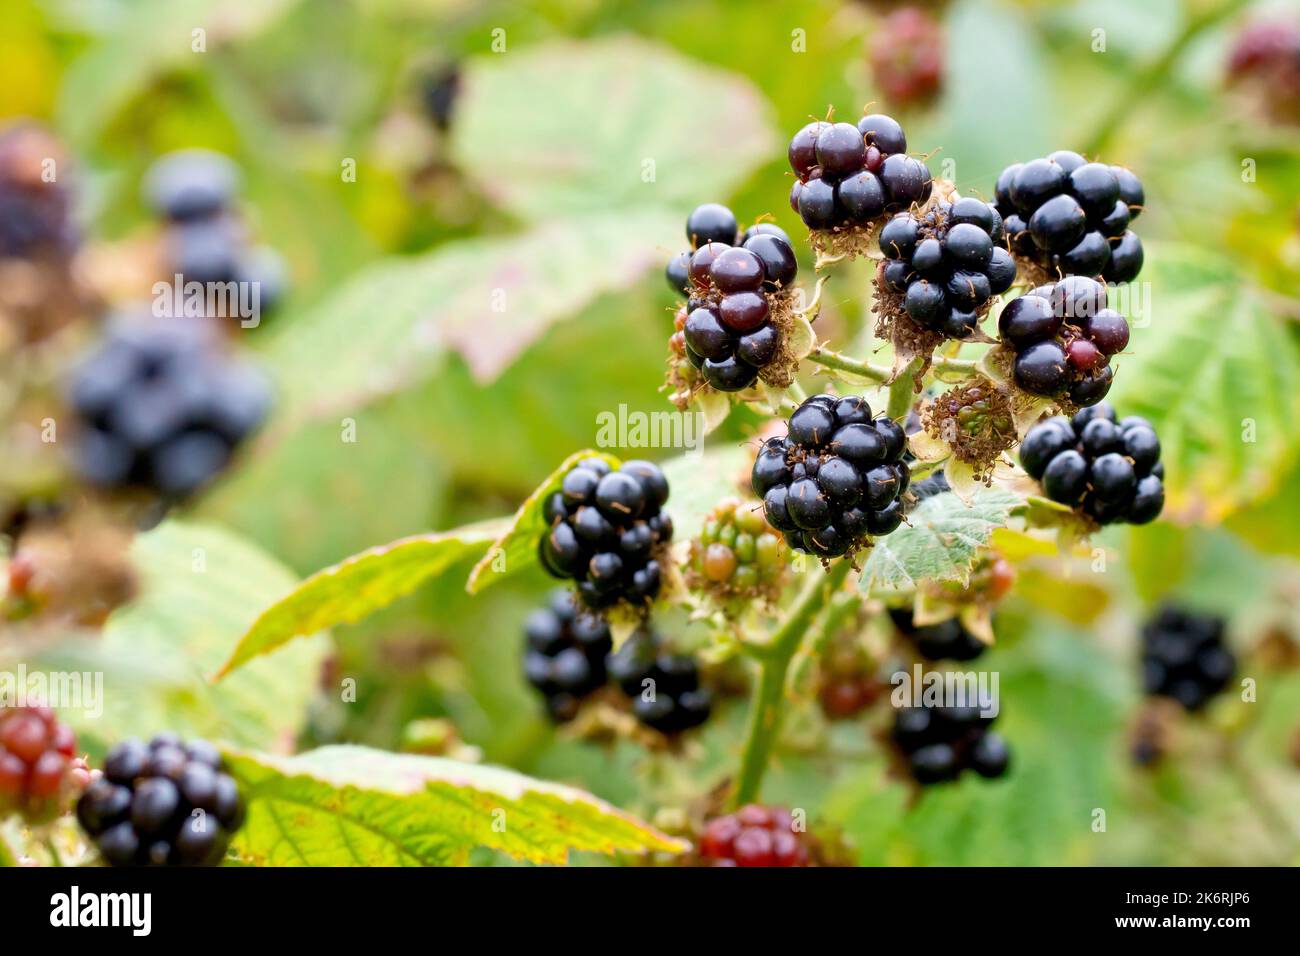 Bramble or Blackberry (rubus fruticosus), close up of the blackberries, fruits or brambles of the common trailing shrub. Stock Photo